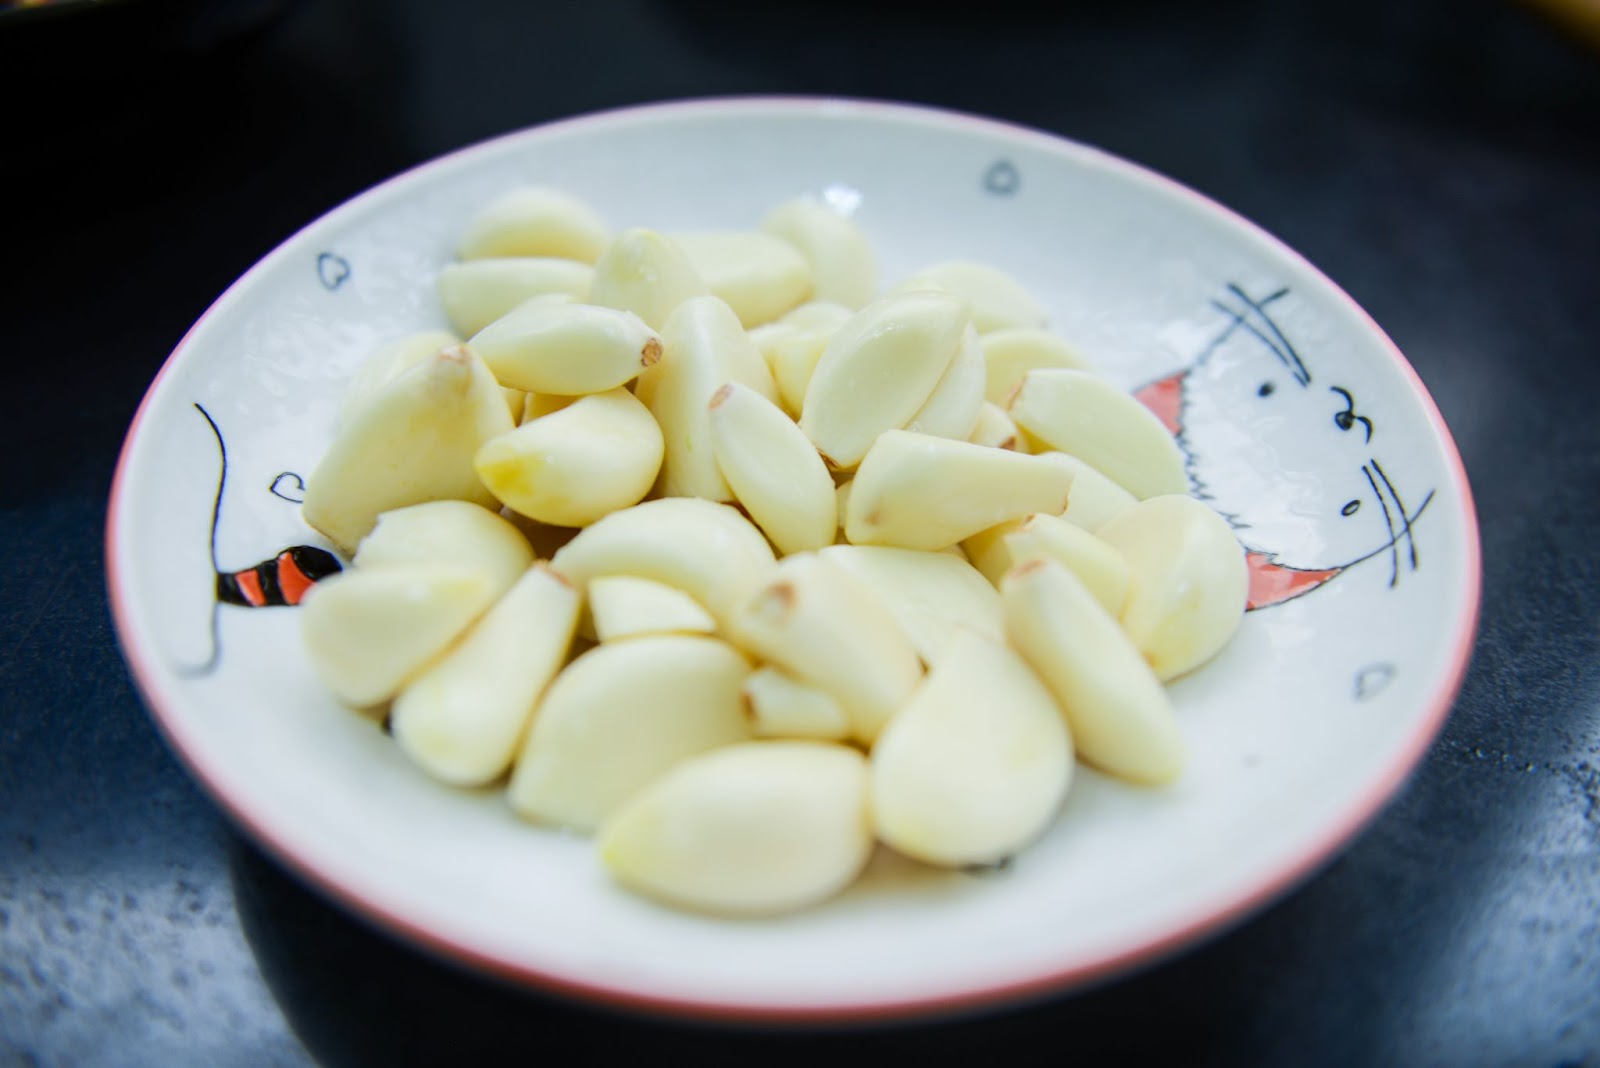 Garlic is a superb food ingredient to help boos immunity.